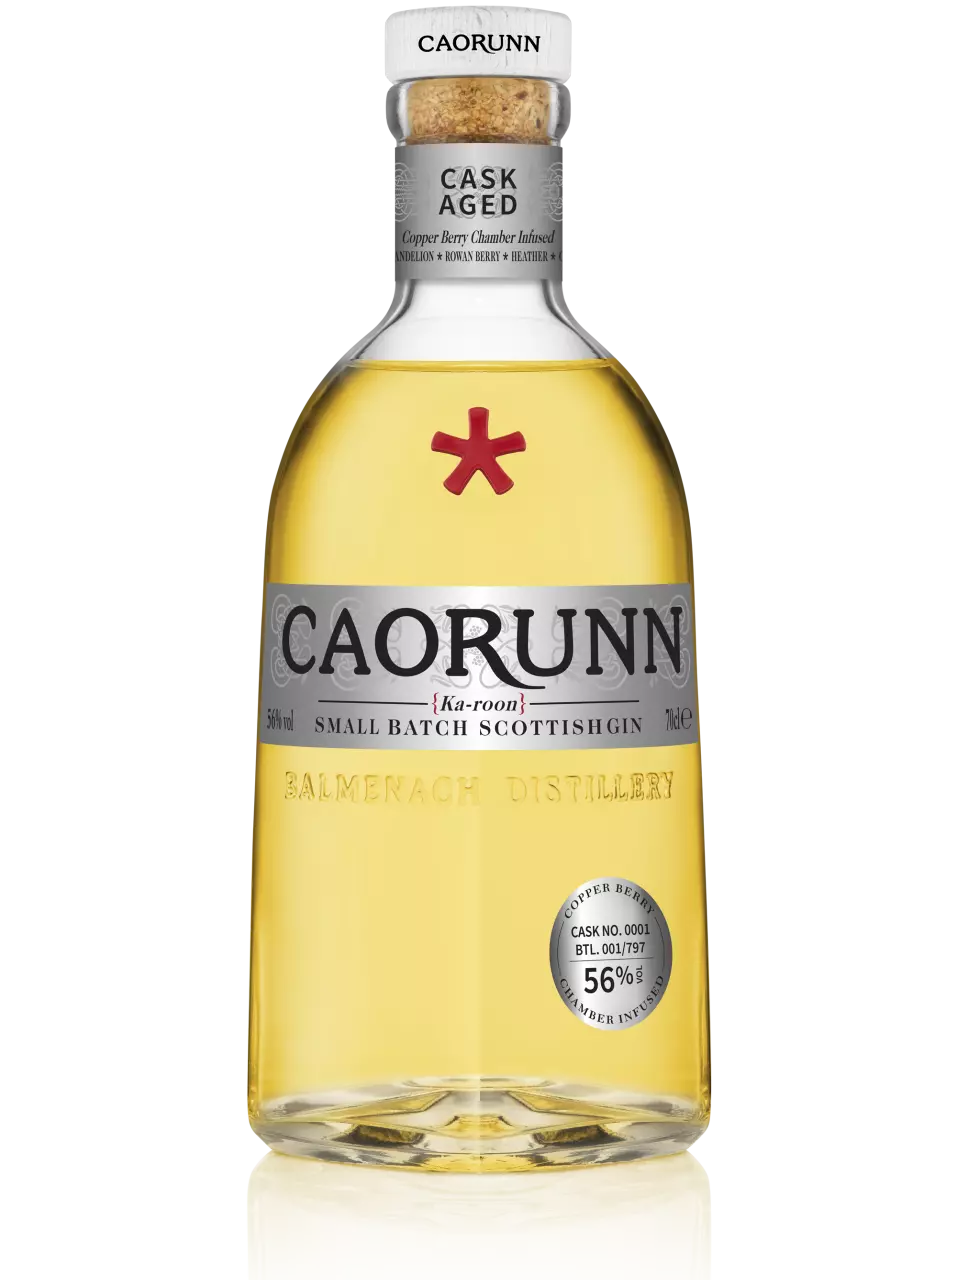 Caorunn Gin Cask Aged gin detail